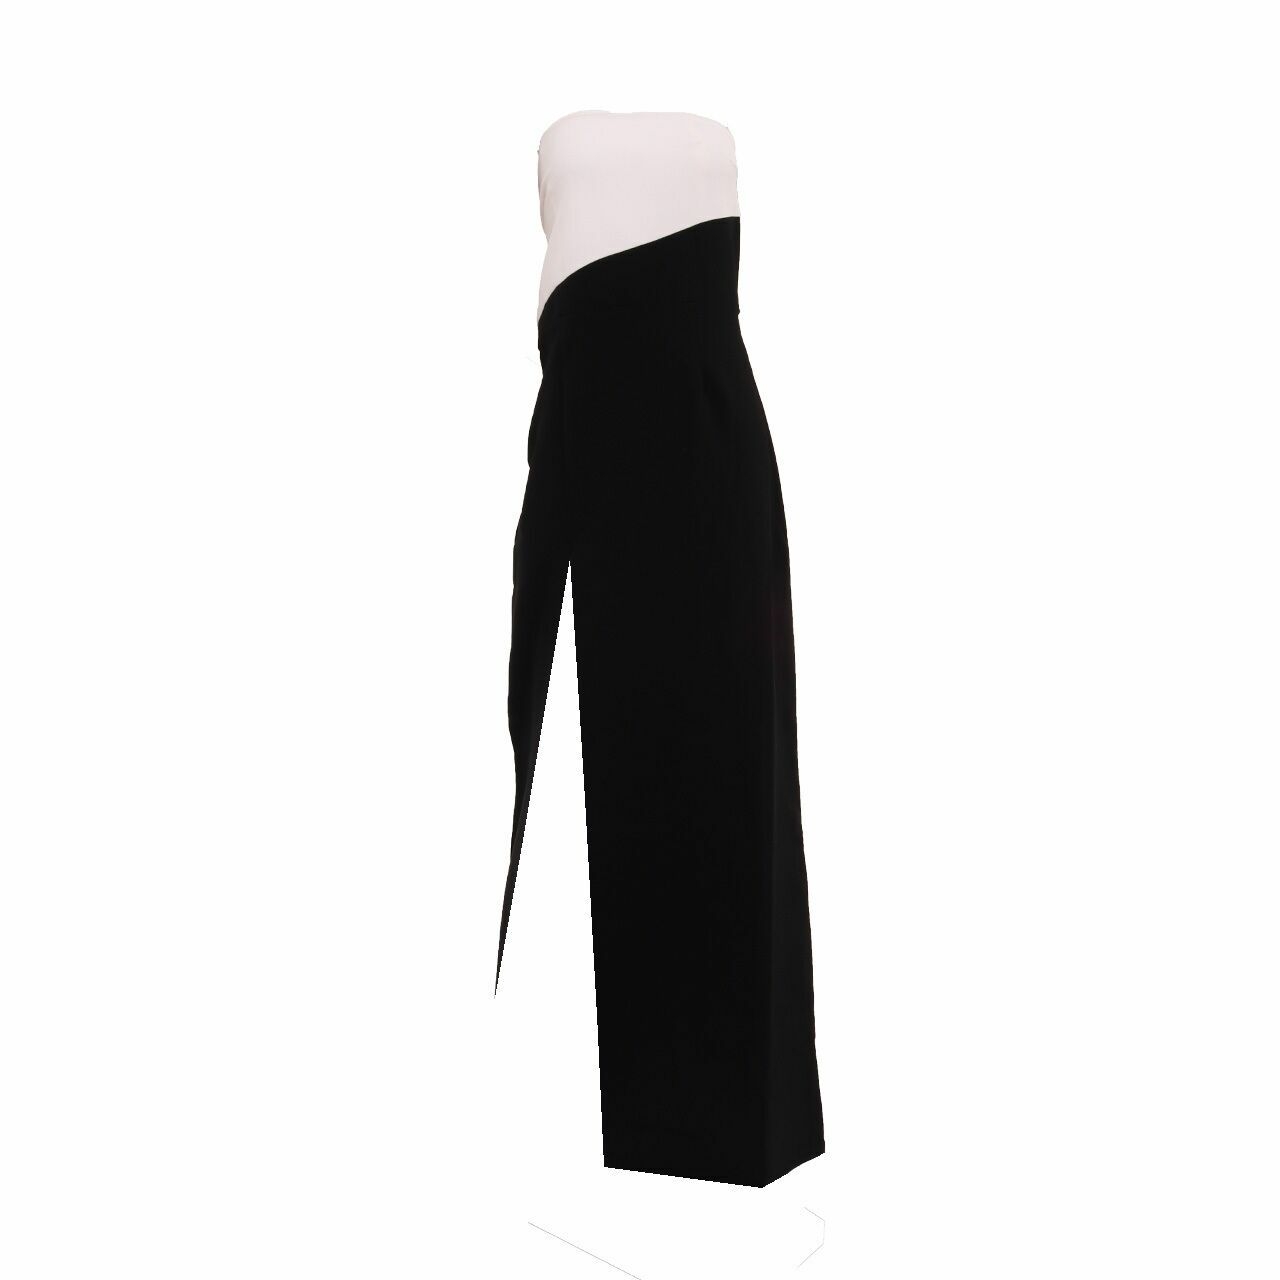 Malika By Modelano Black & White Slit Tube Long Dress